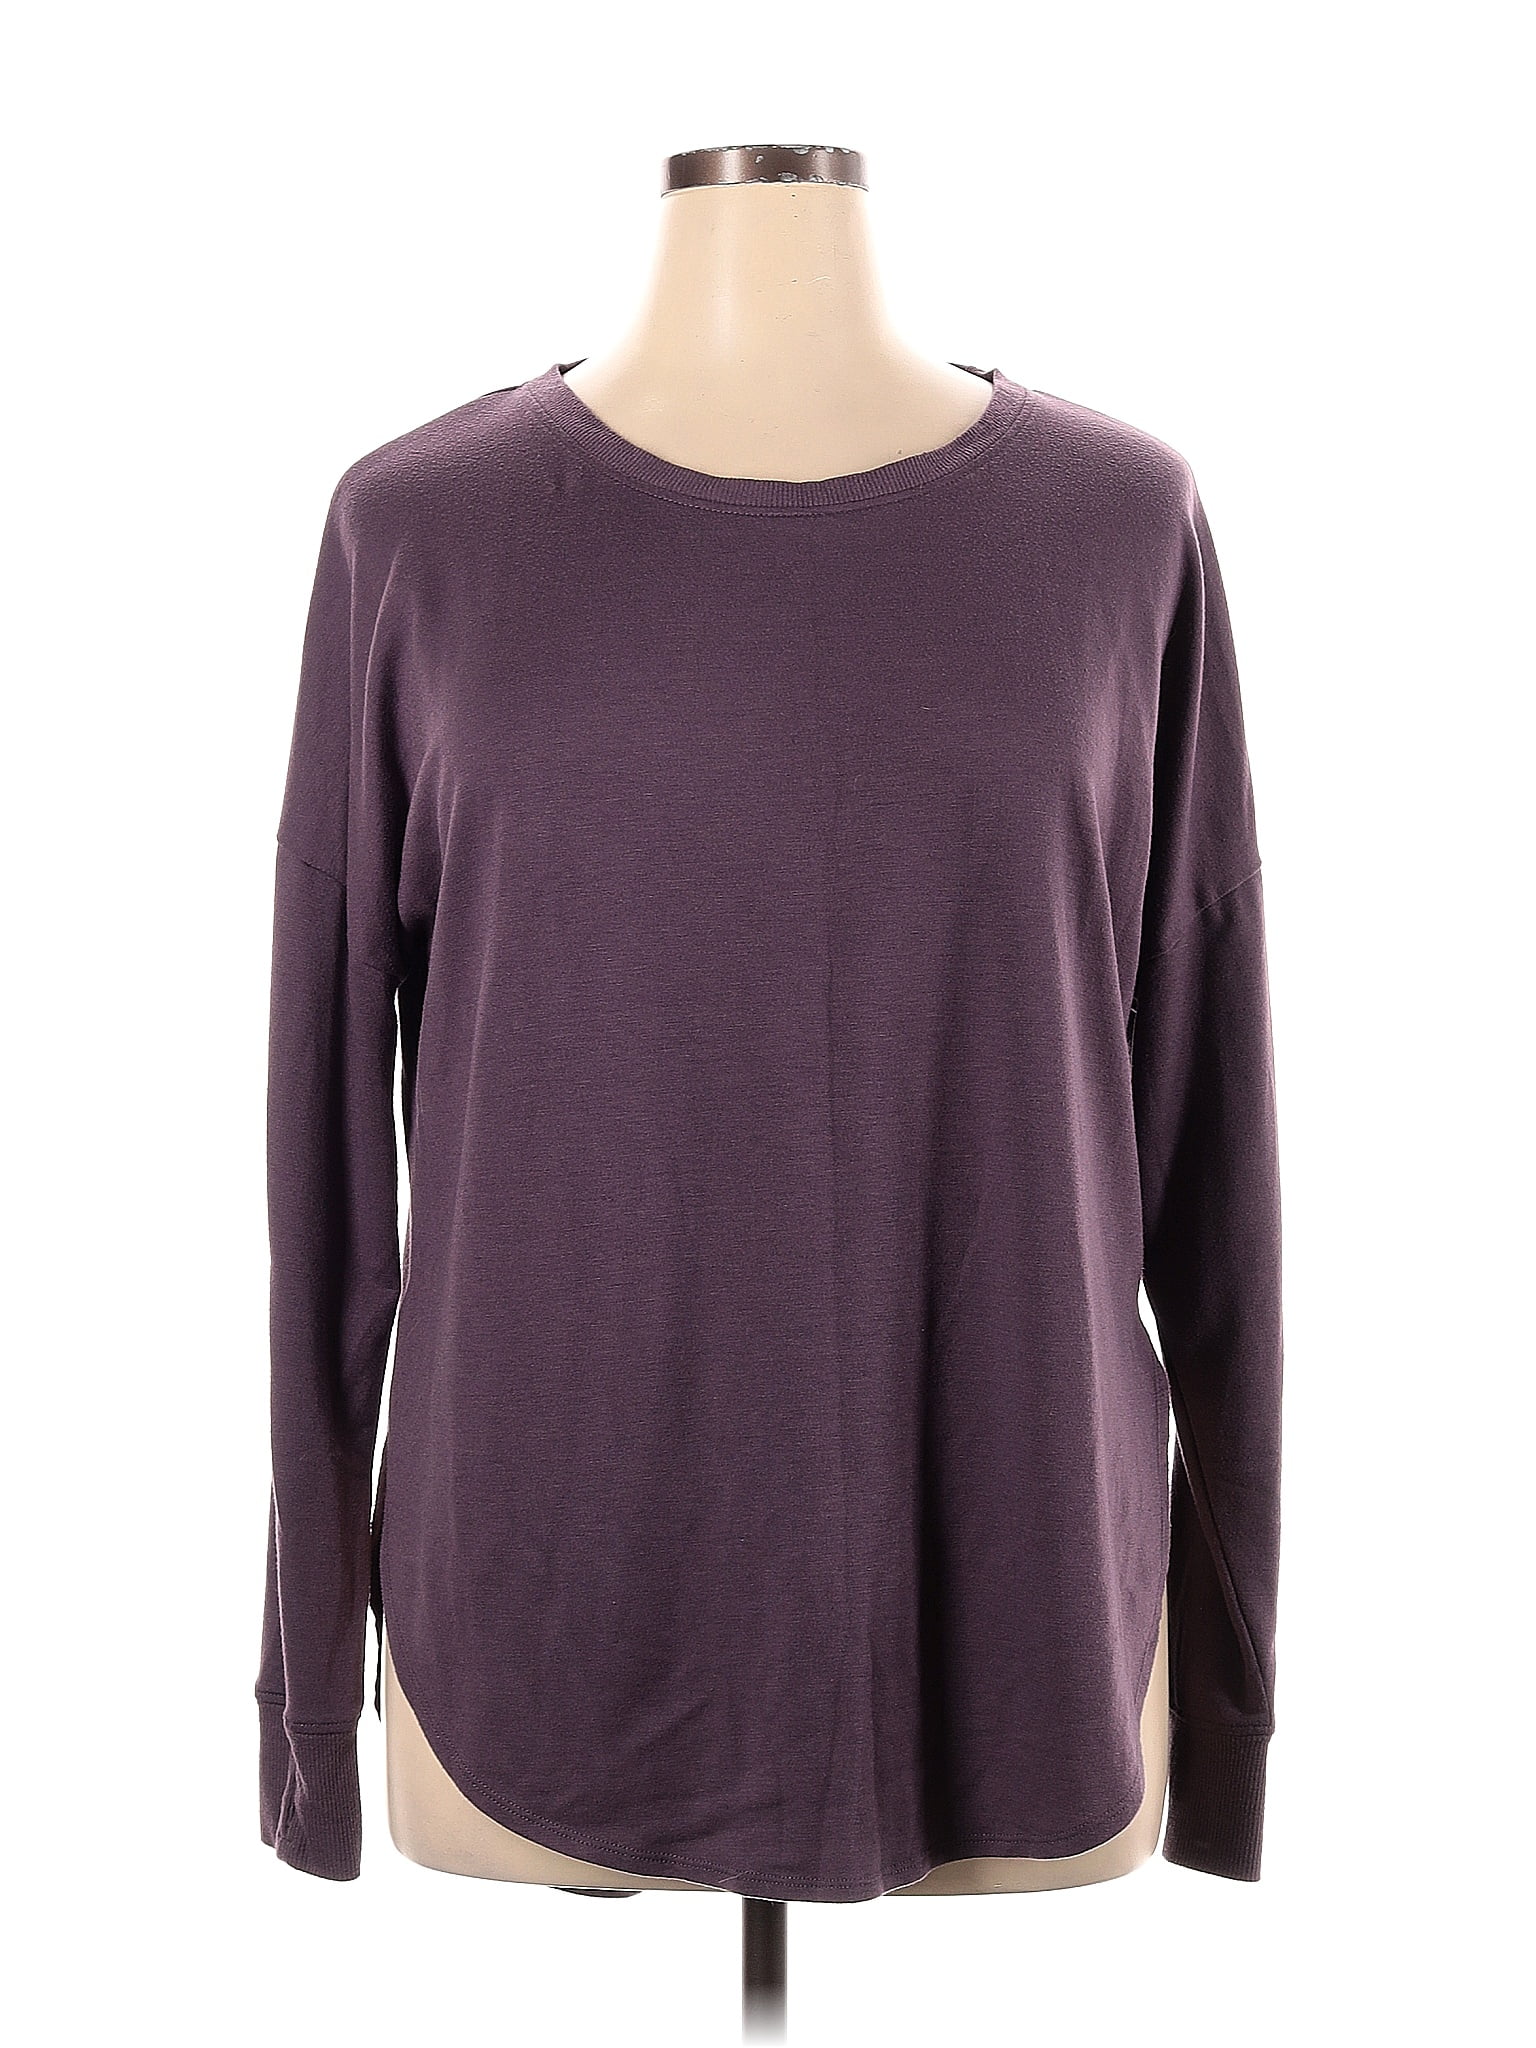 Crane Purple Long Sleeve T-Shirt Size XL - 64% off